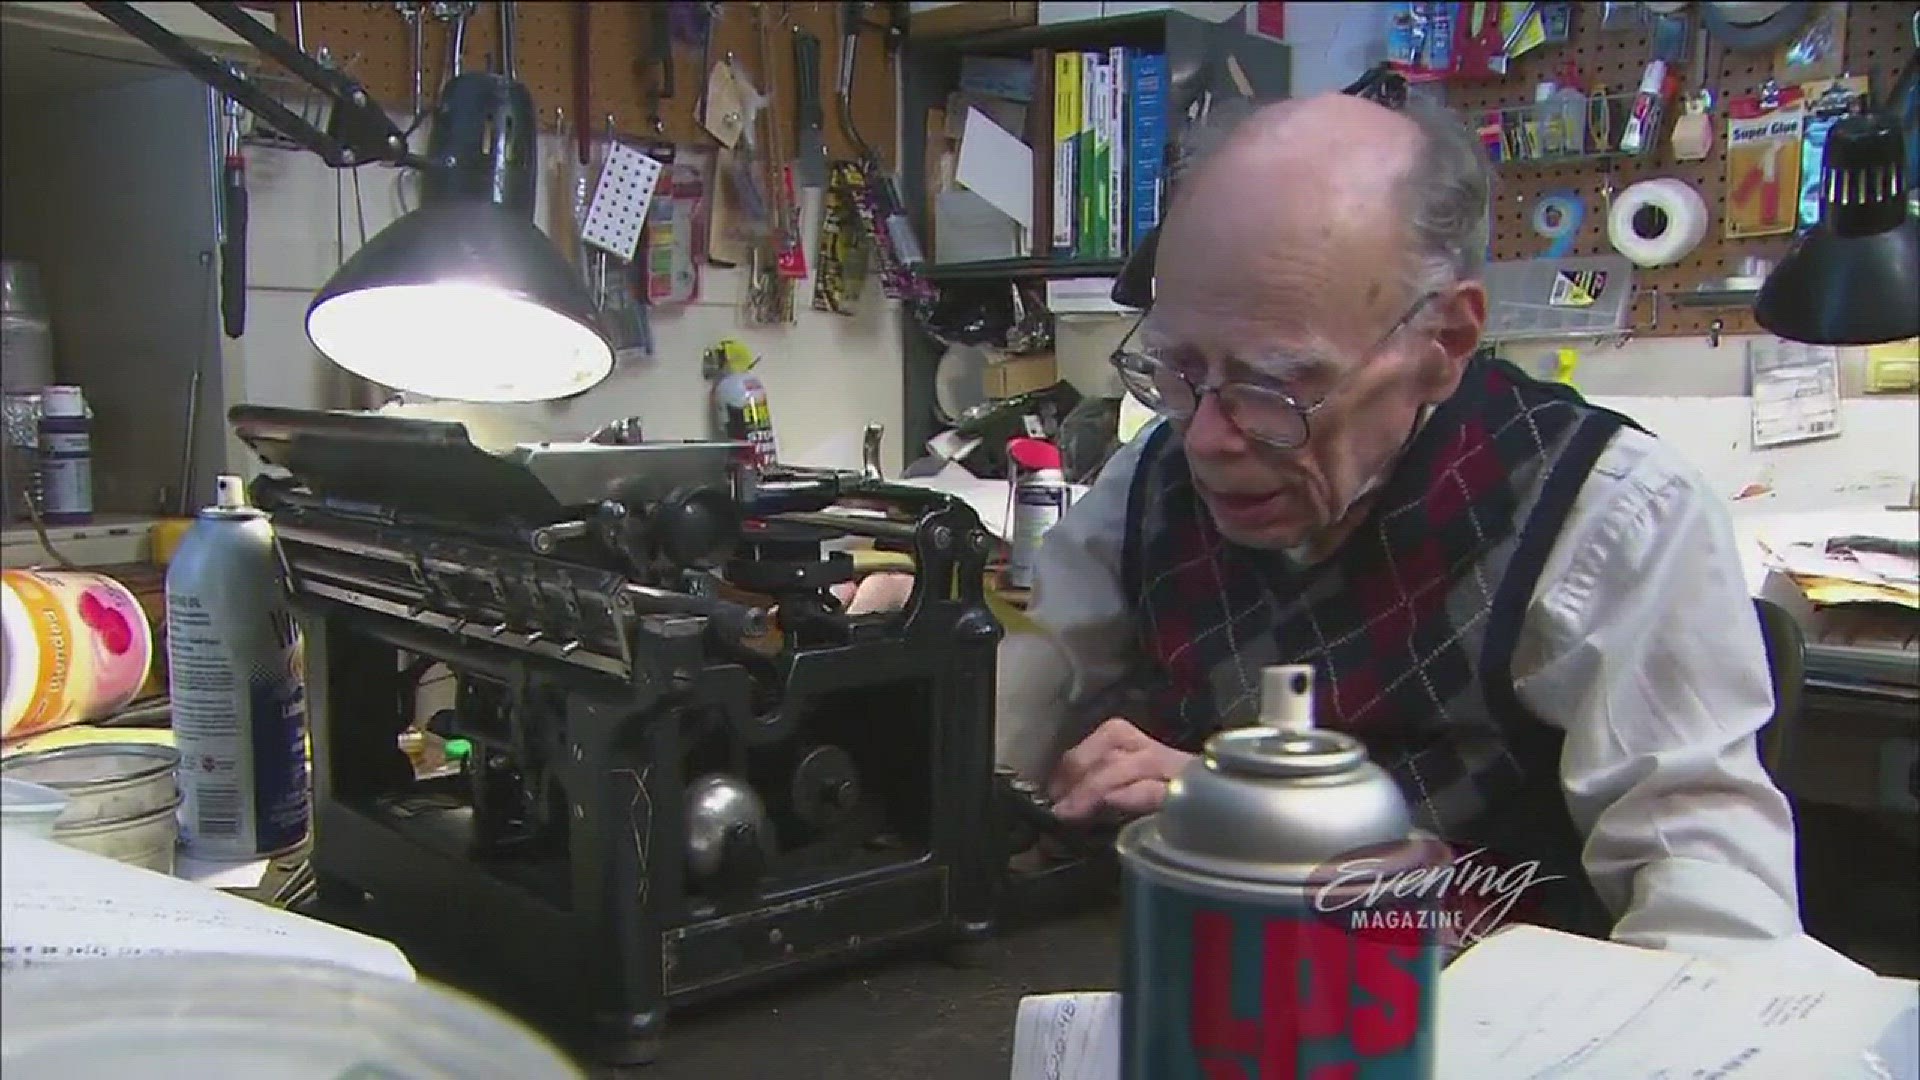 The last typewriter repairman